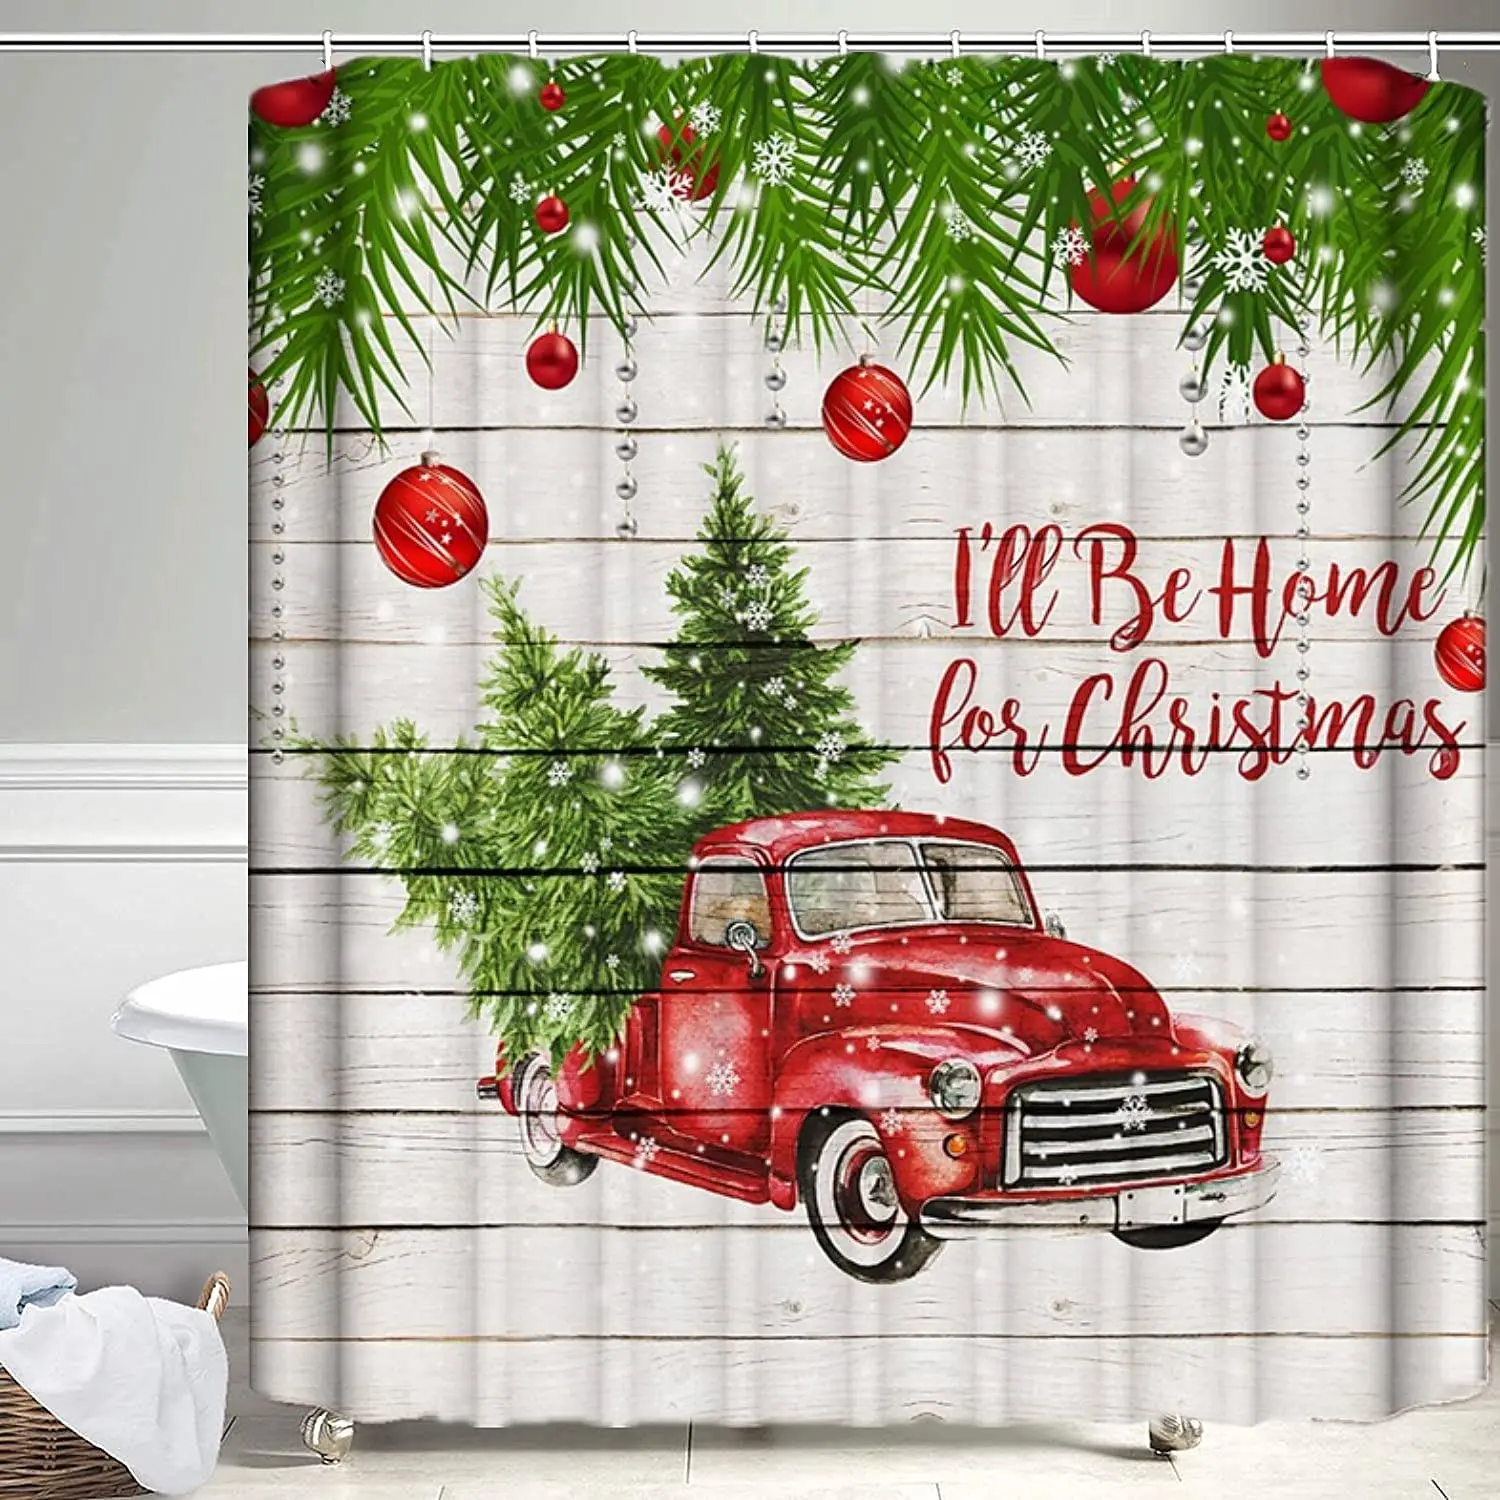 Merry Christmas Home Shower Curtain Waterproof Bathroom Xmas Polyester 12 Hooks 